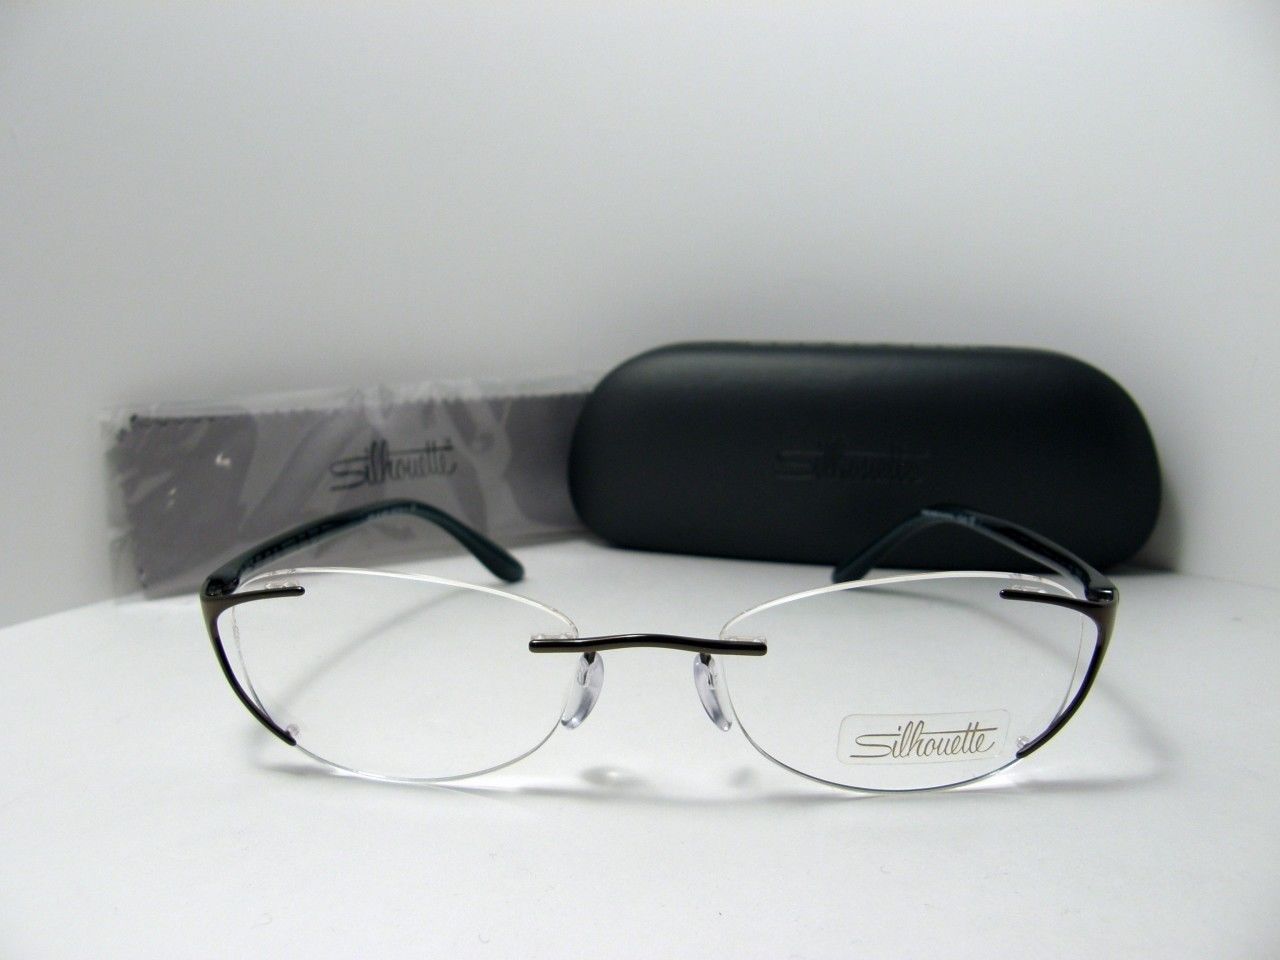 New Authentic Silhouette Titanium Rimless Eyeglasses 6659 6053 Made In Italy - $106.87